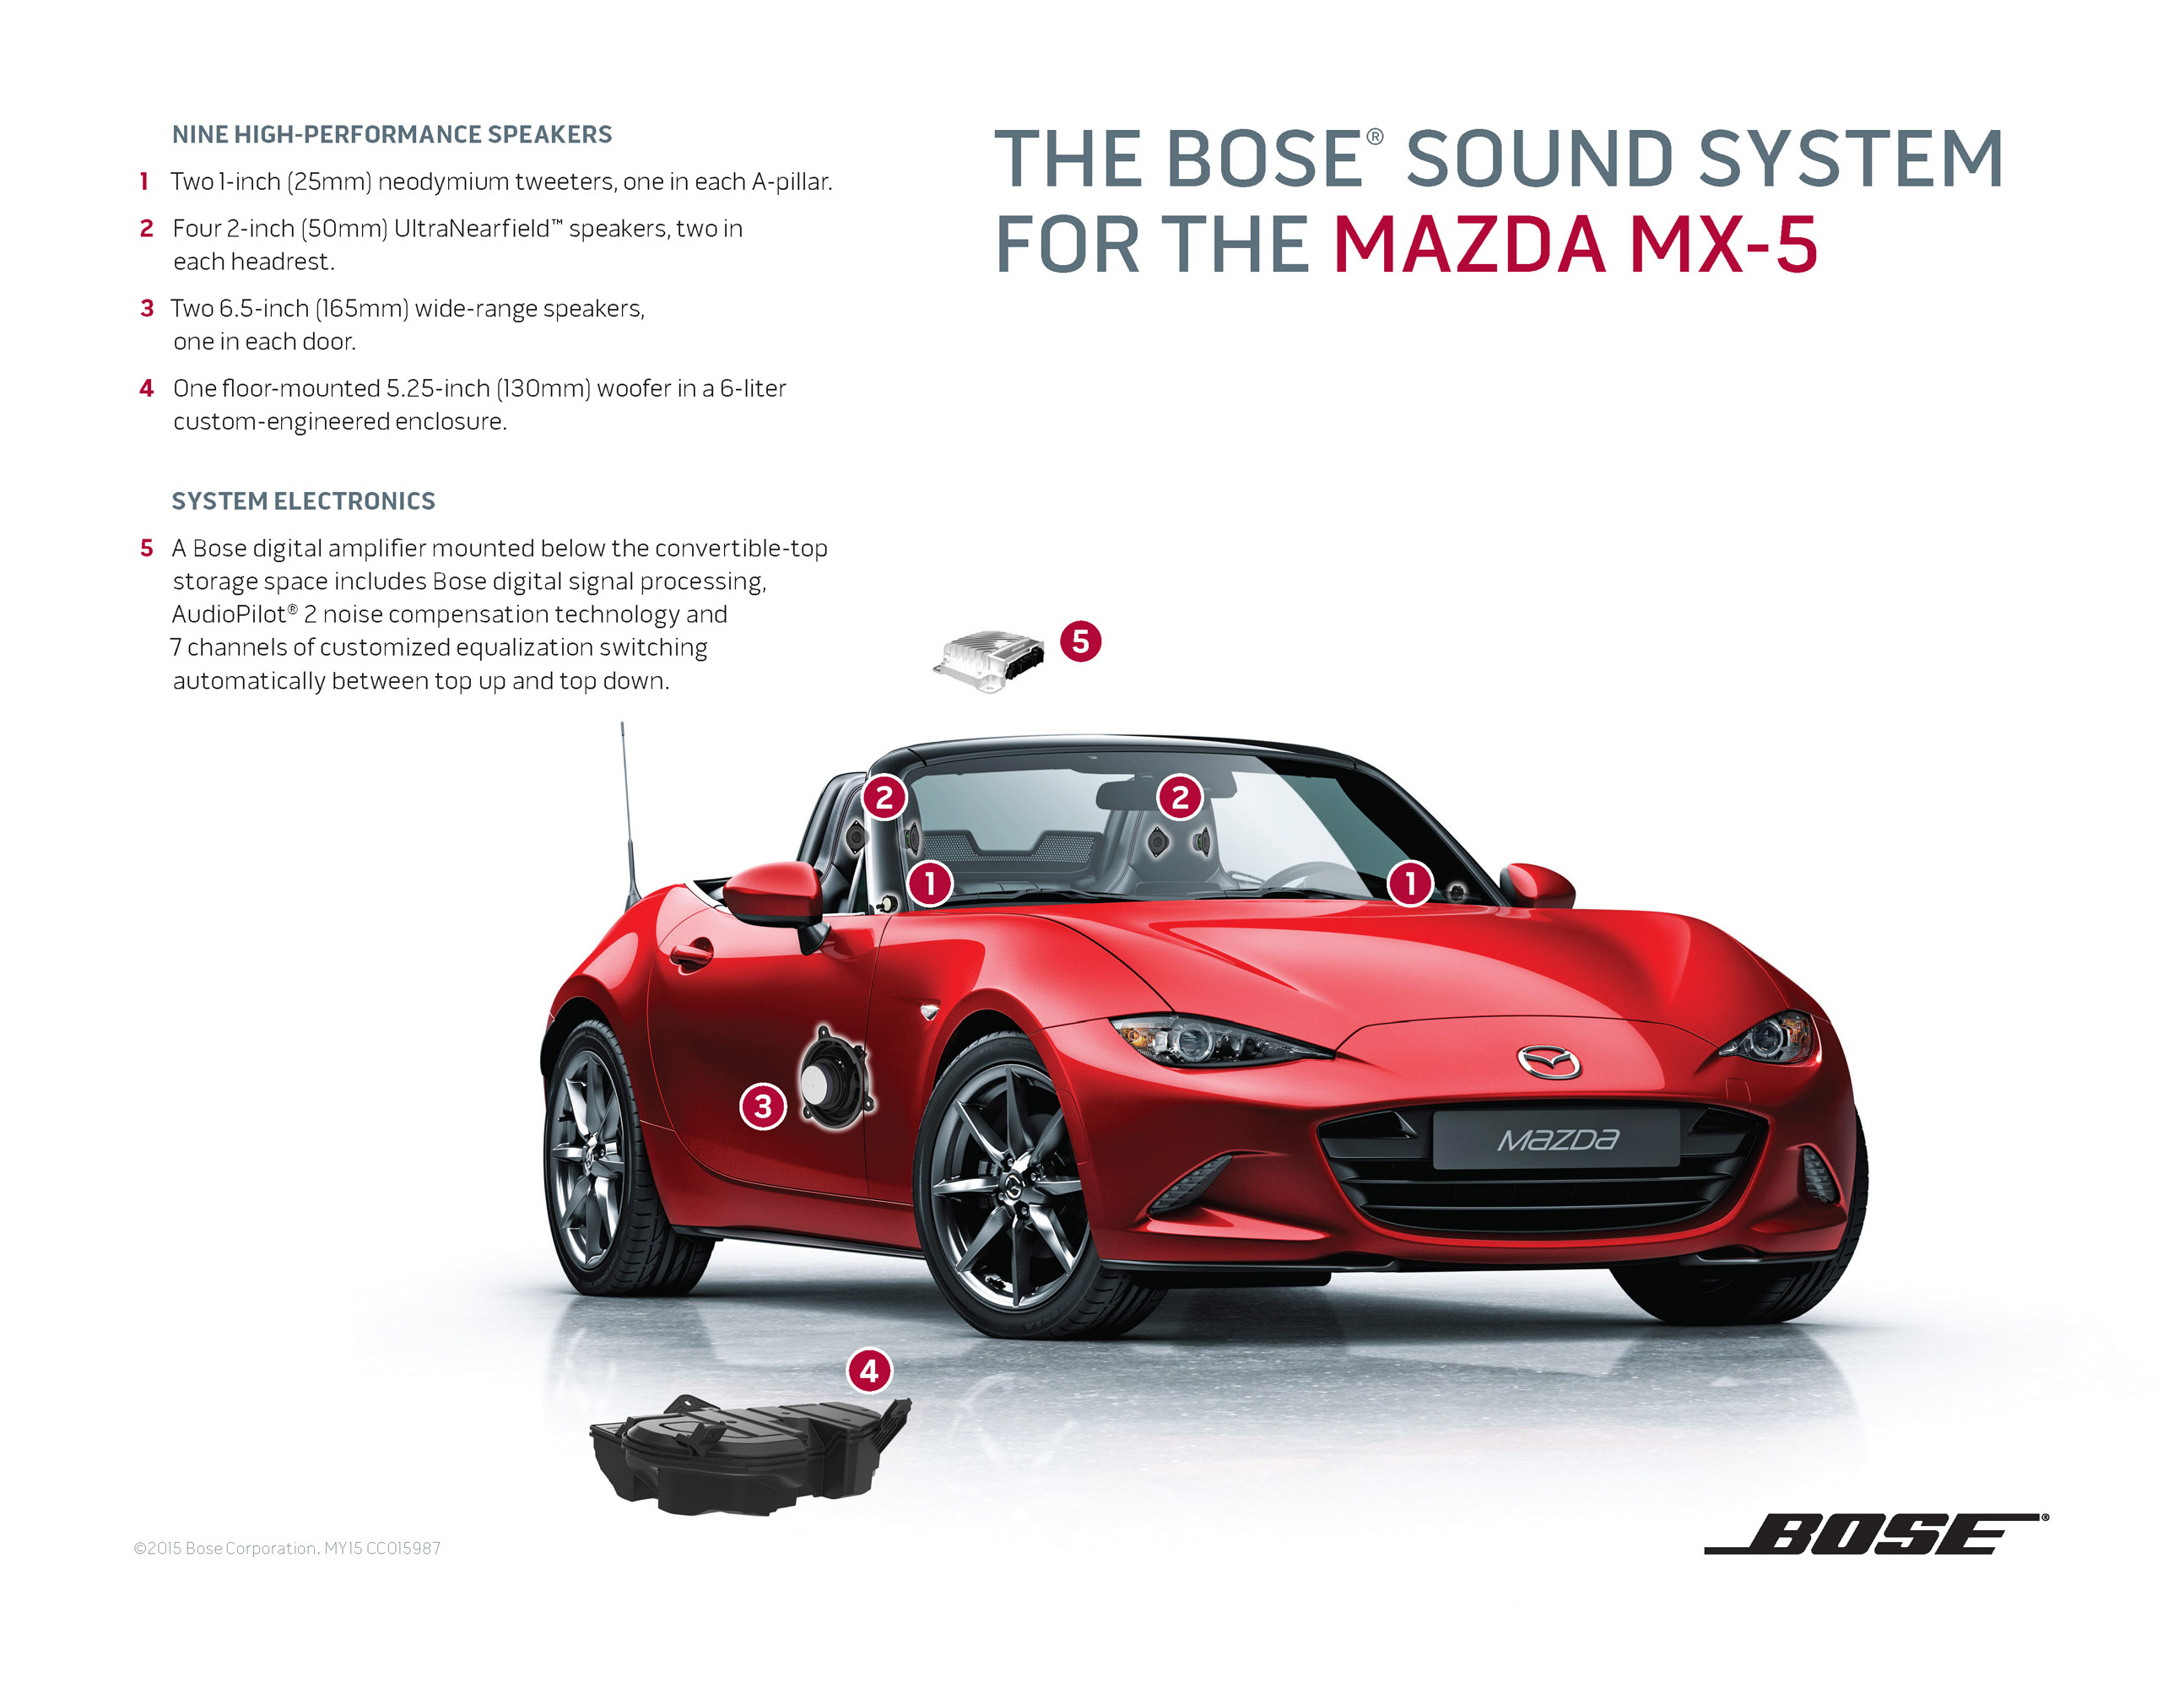 Mazda Miata MX-5 With BOSE Audio System